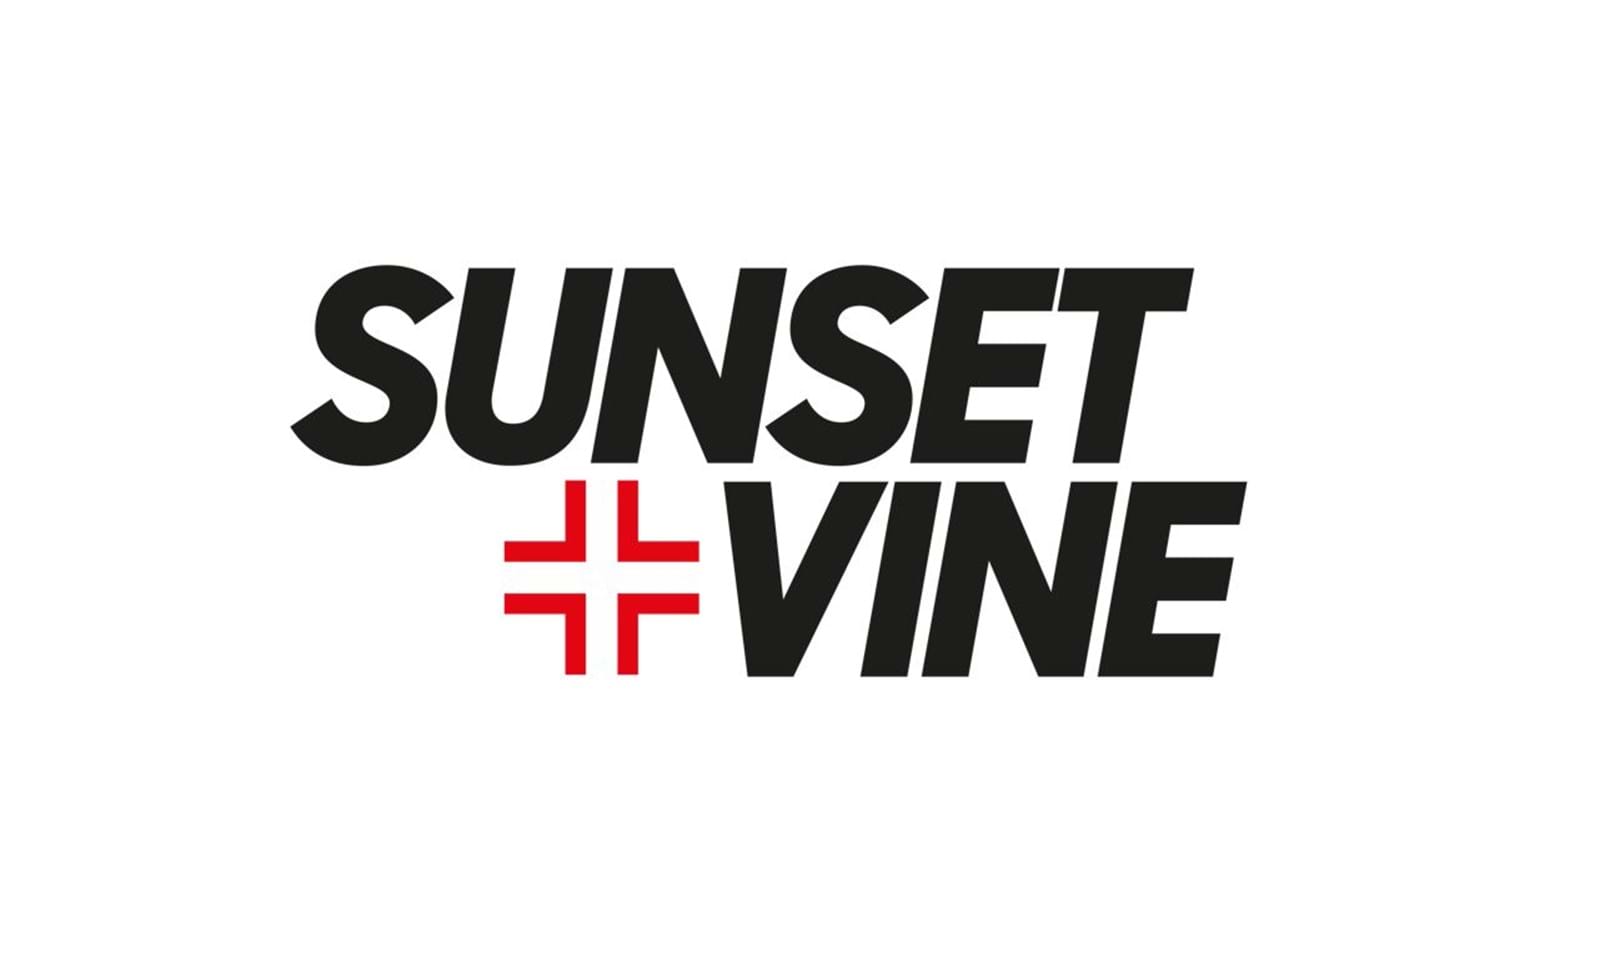 Sunset + Vine announced as Broadcast Production Partner for DP World ILT20 